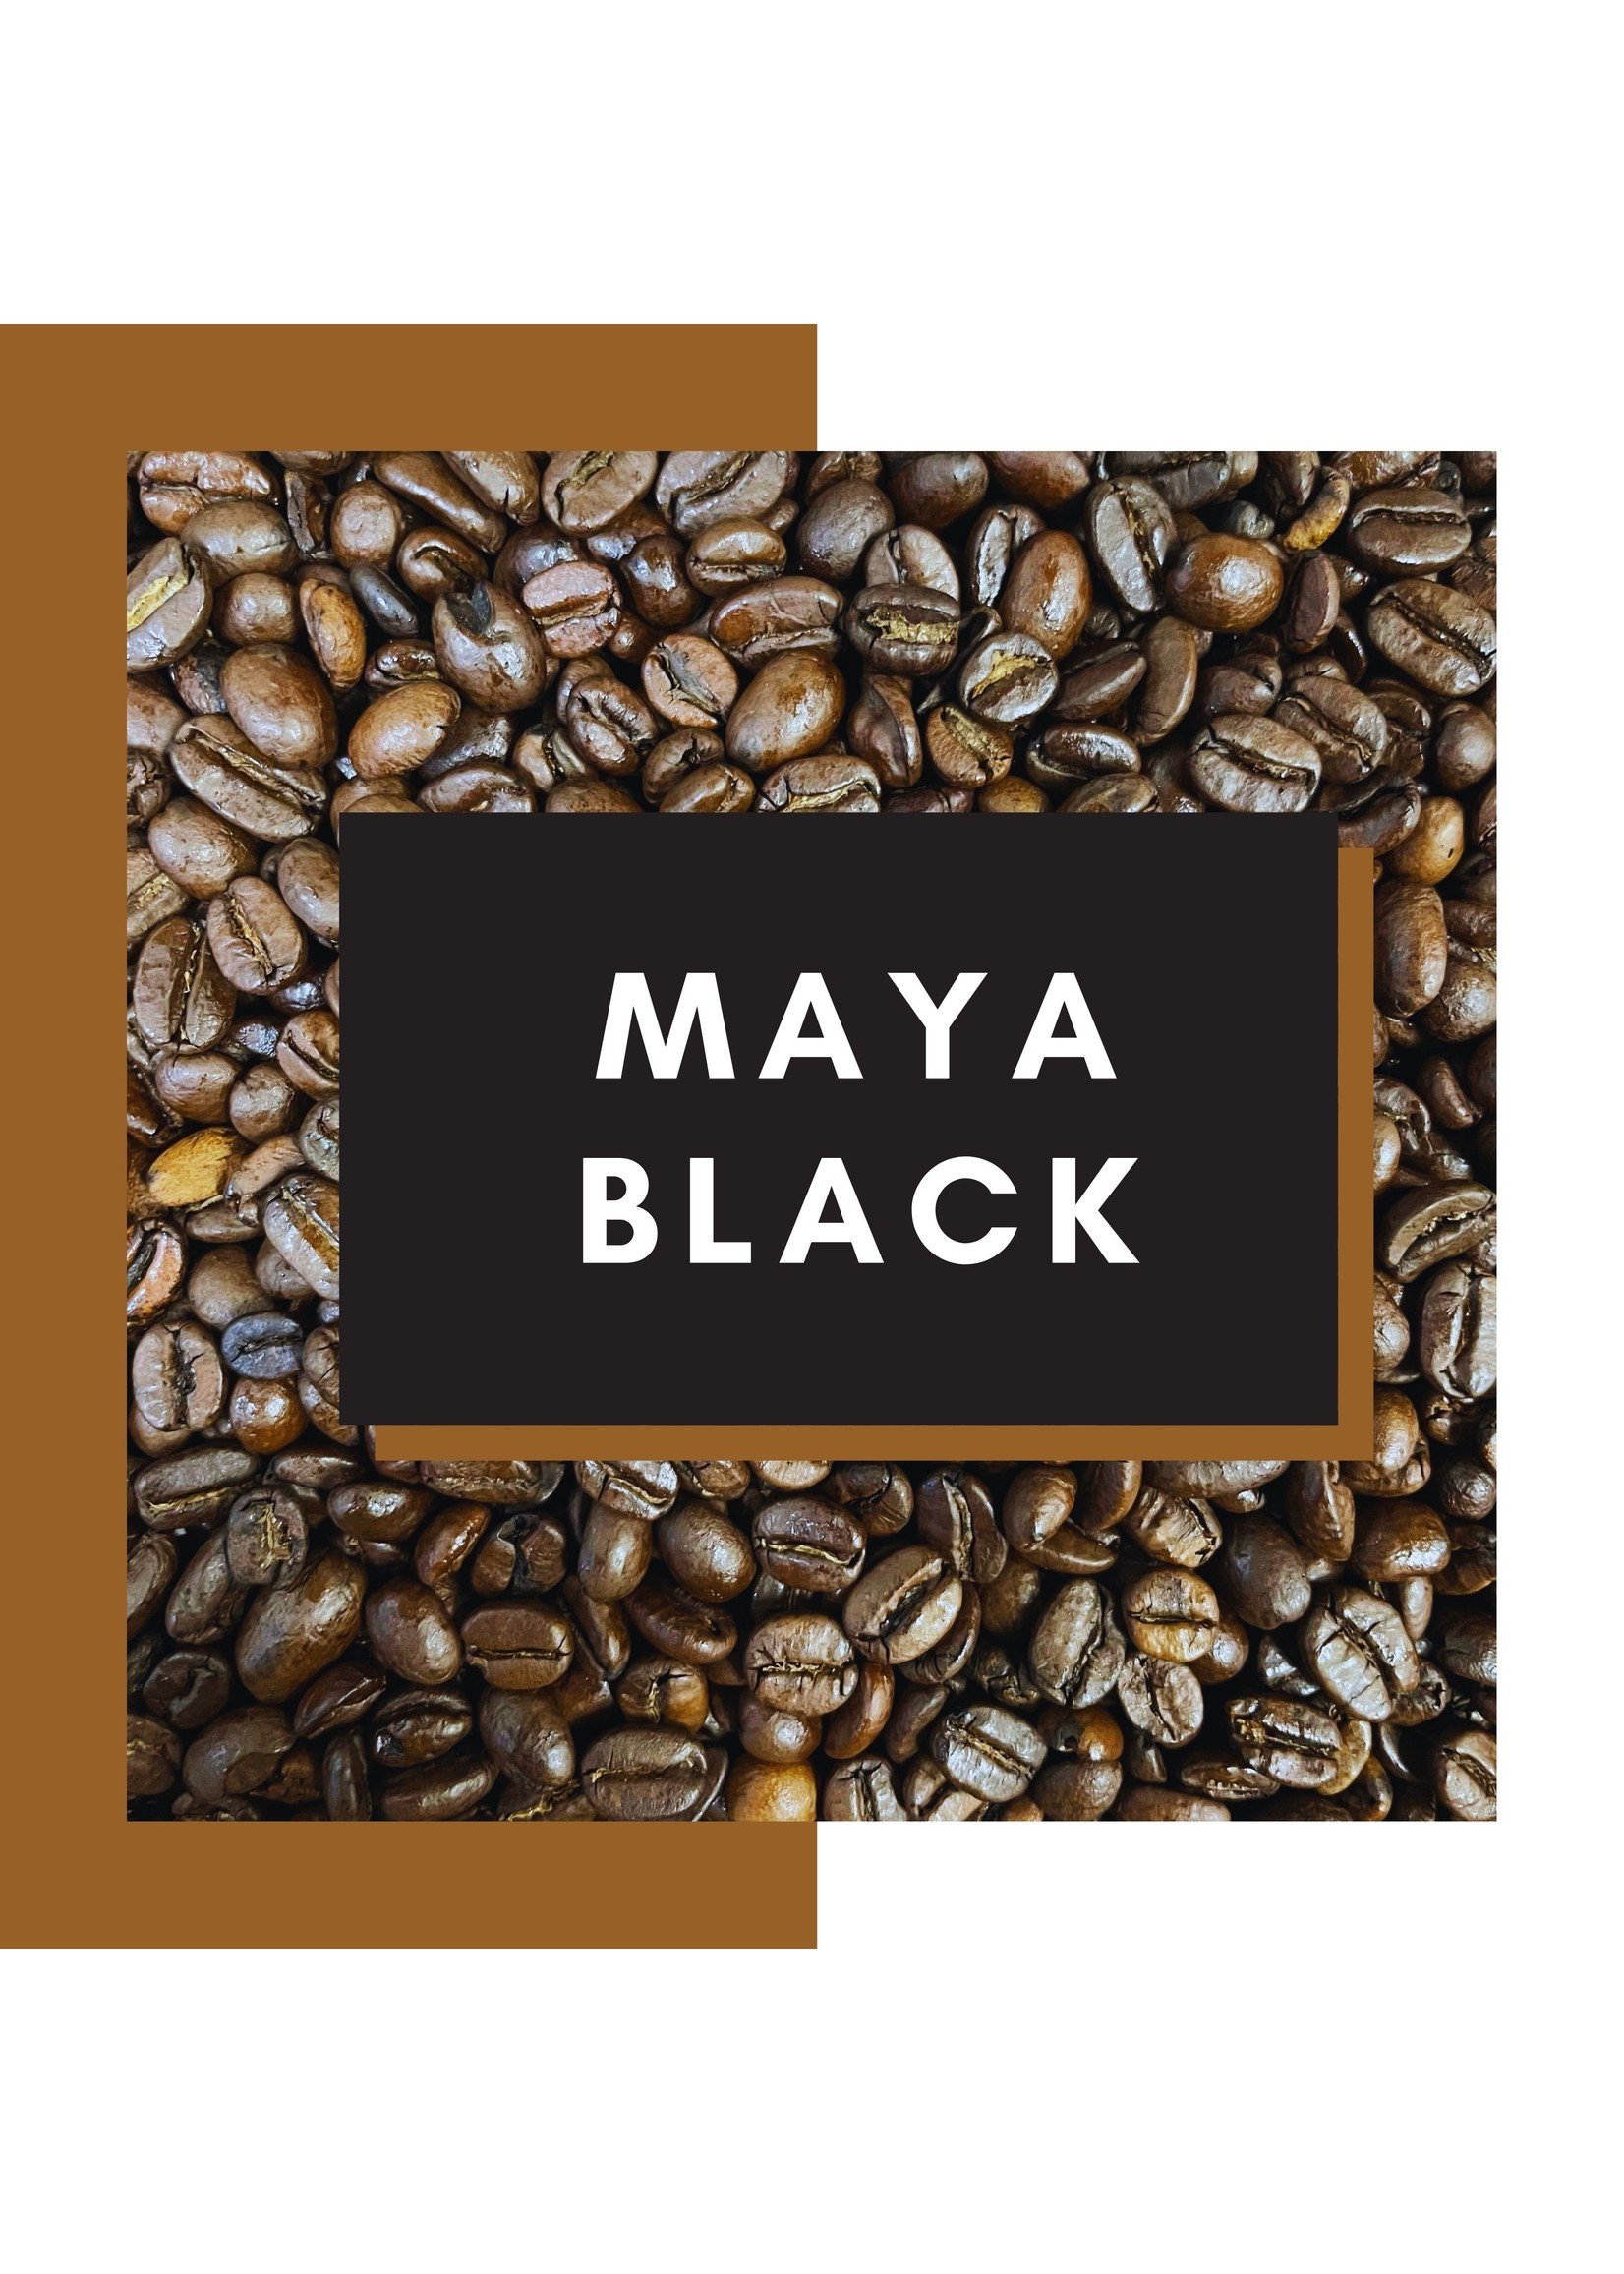 The Best of Nature Maya Black